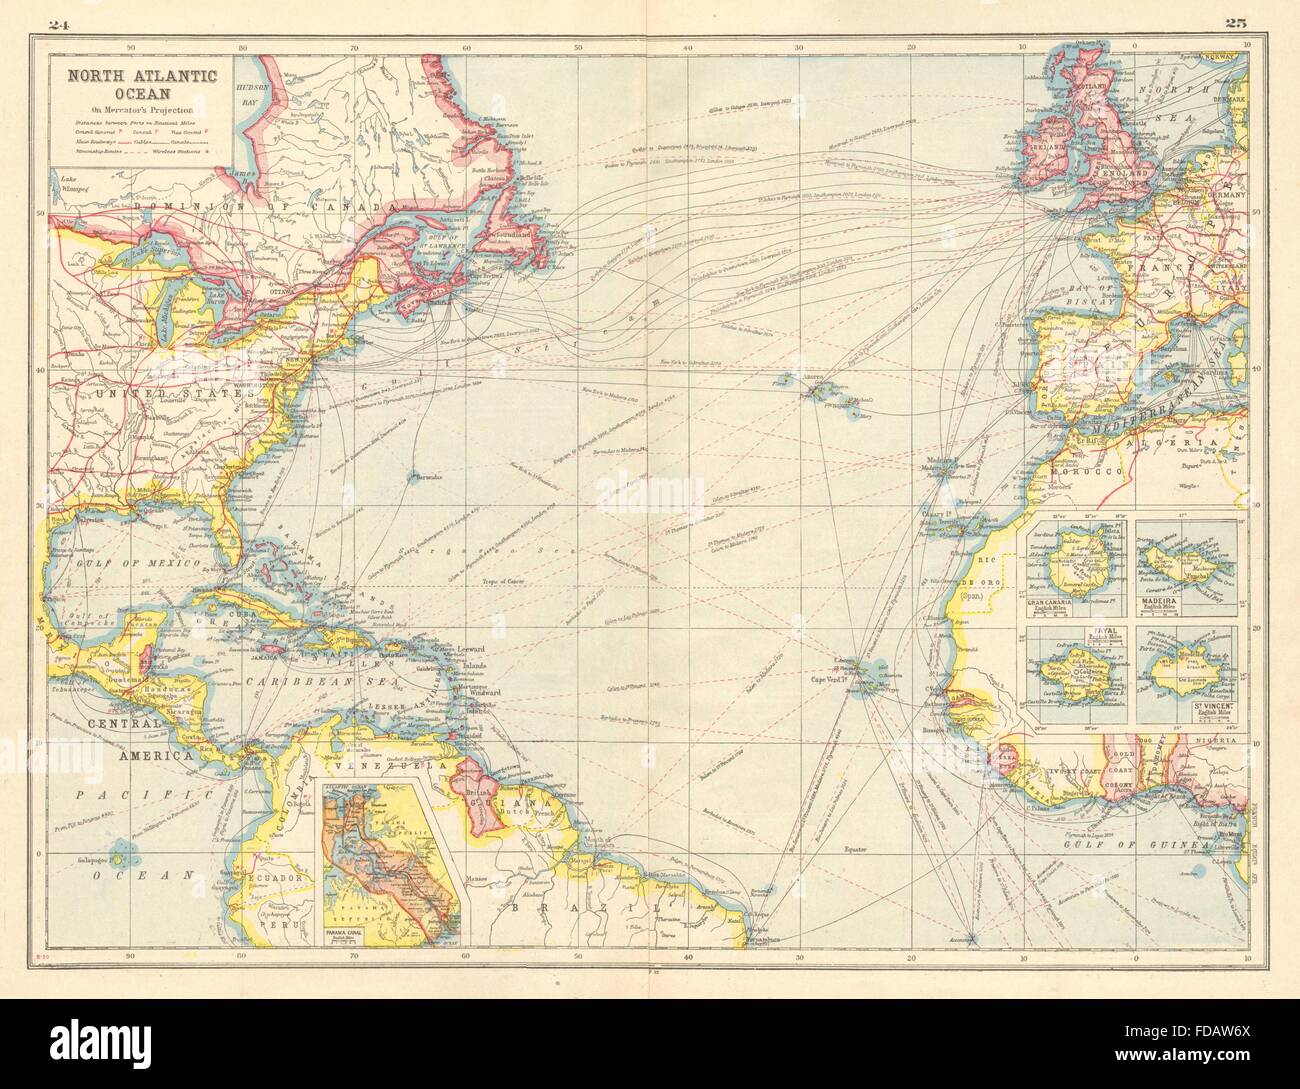 NORTH ATLANTIC OCEAN: Einpresstiefe Panamakanal; Gran Canaria; Madeira. Kabel, 1920-Karte Stockfoto